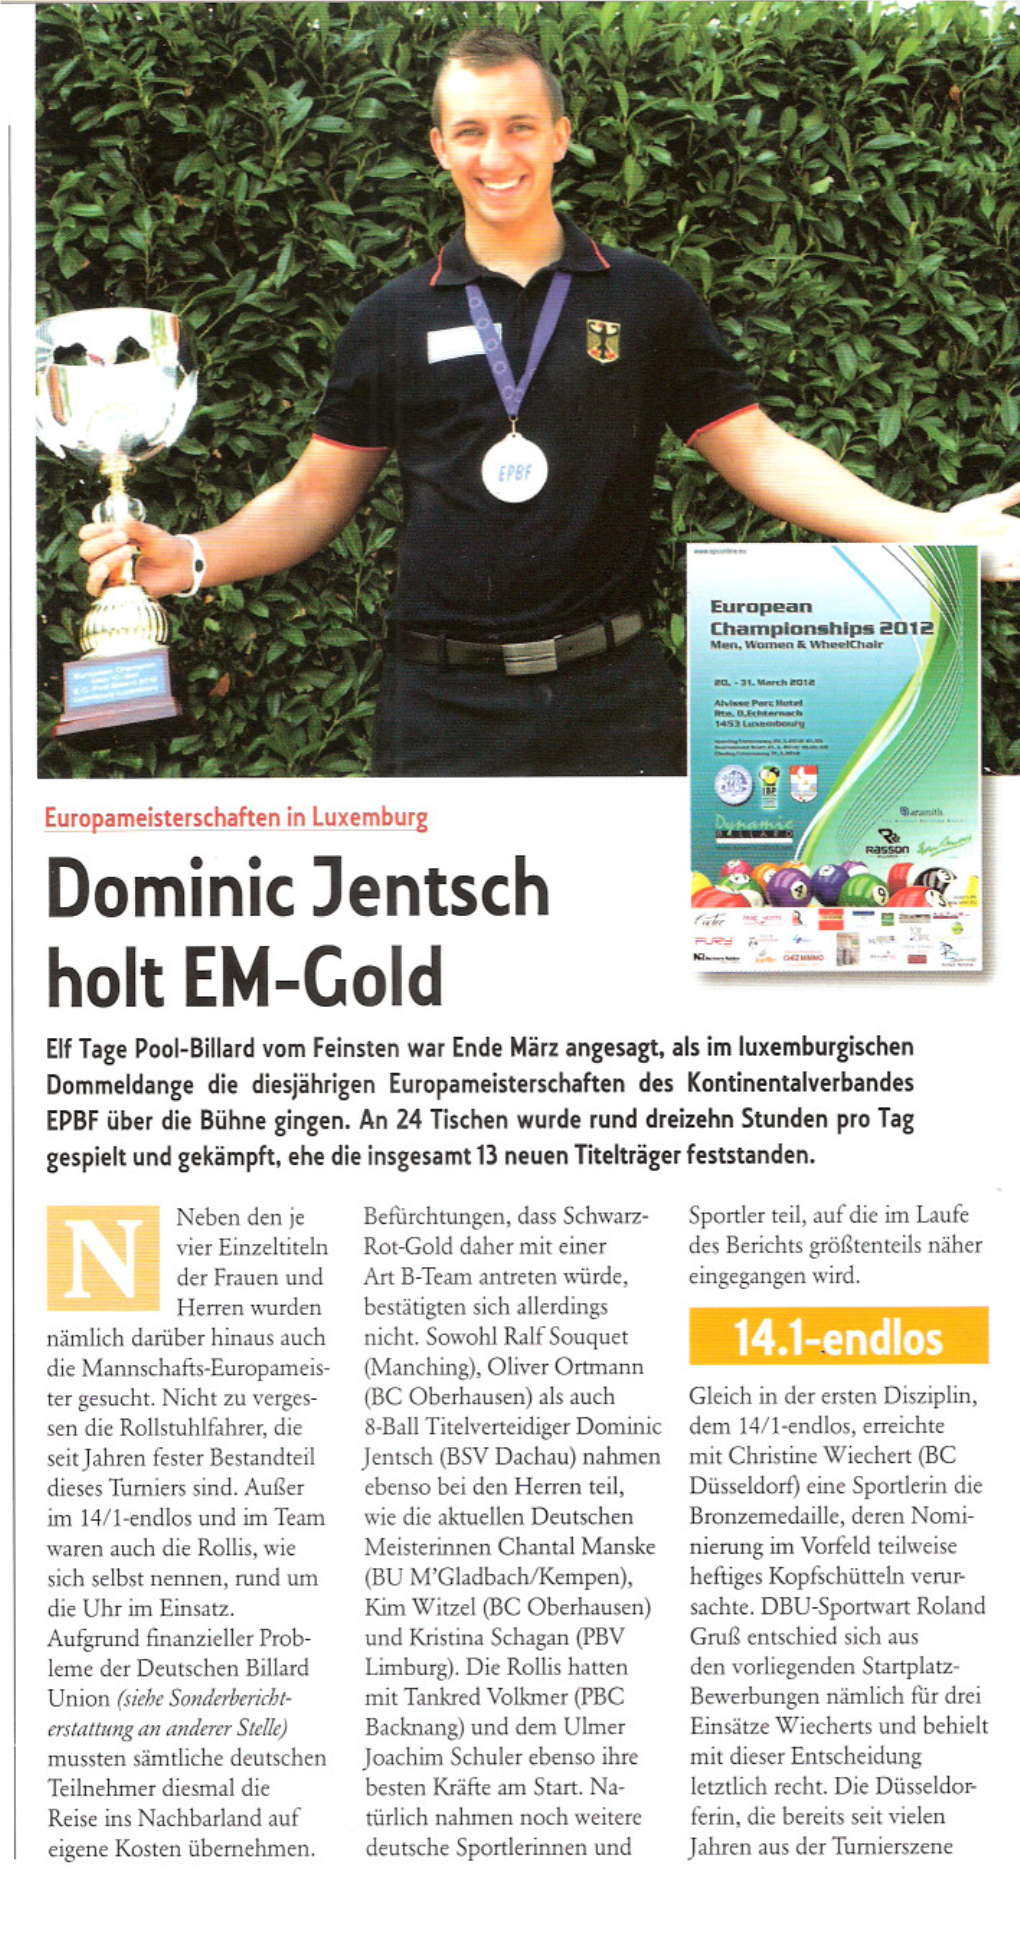 Dominic Jentsch Holt EM-Gold